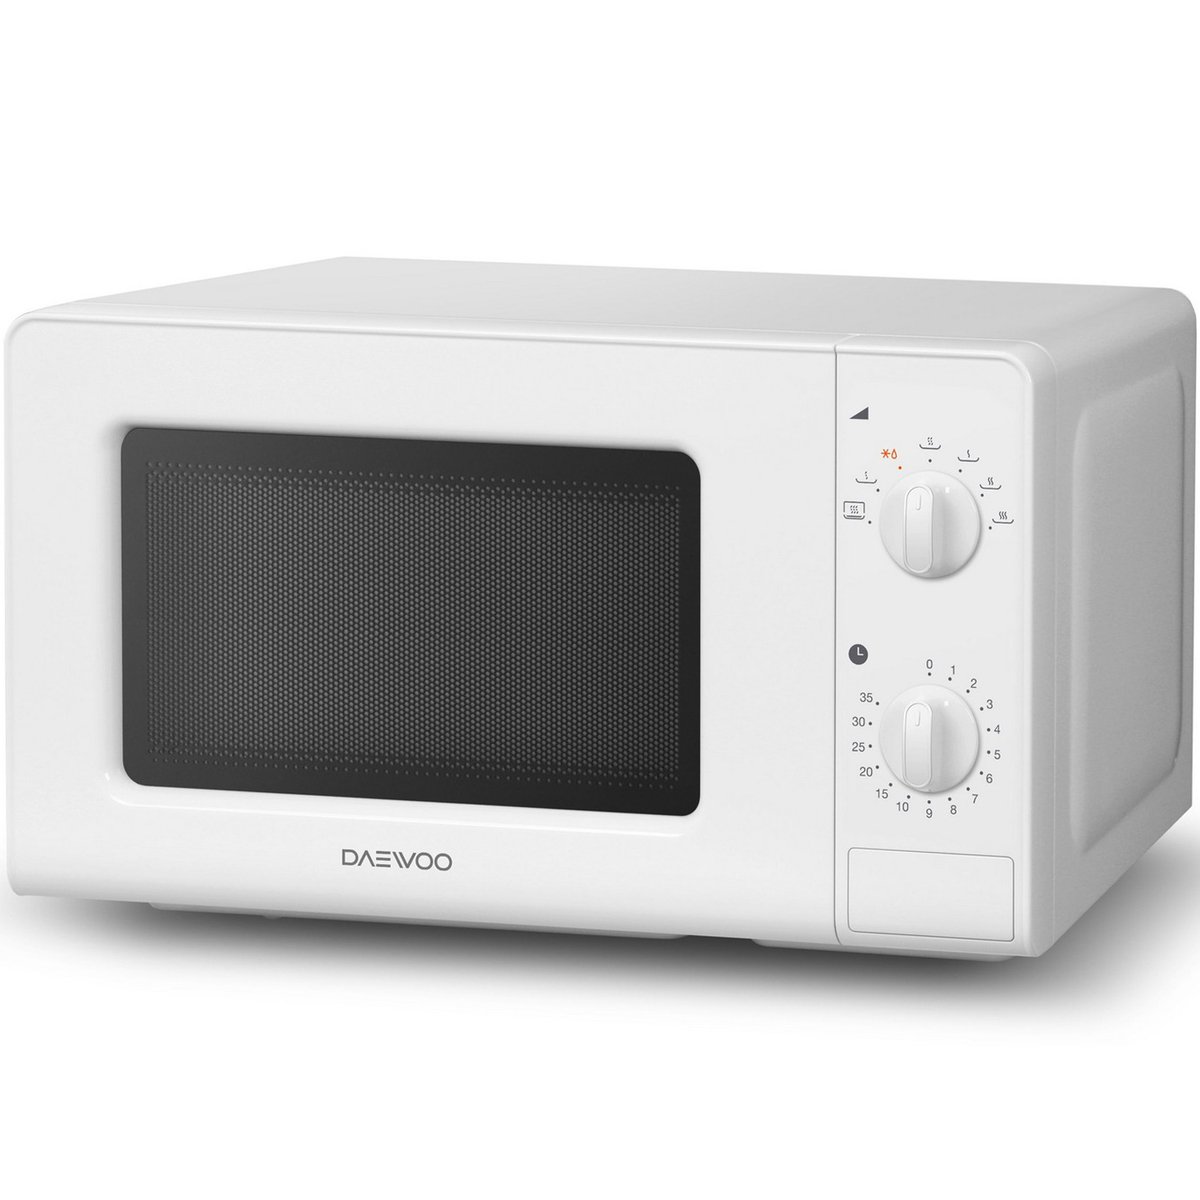 Daewoo Microwave Oven KOR6607 20Ltr